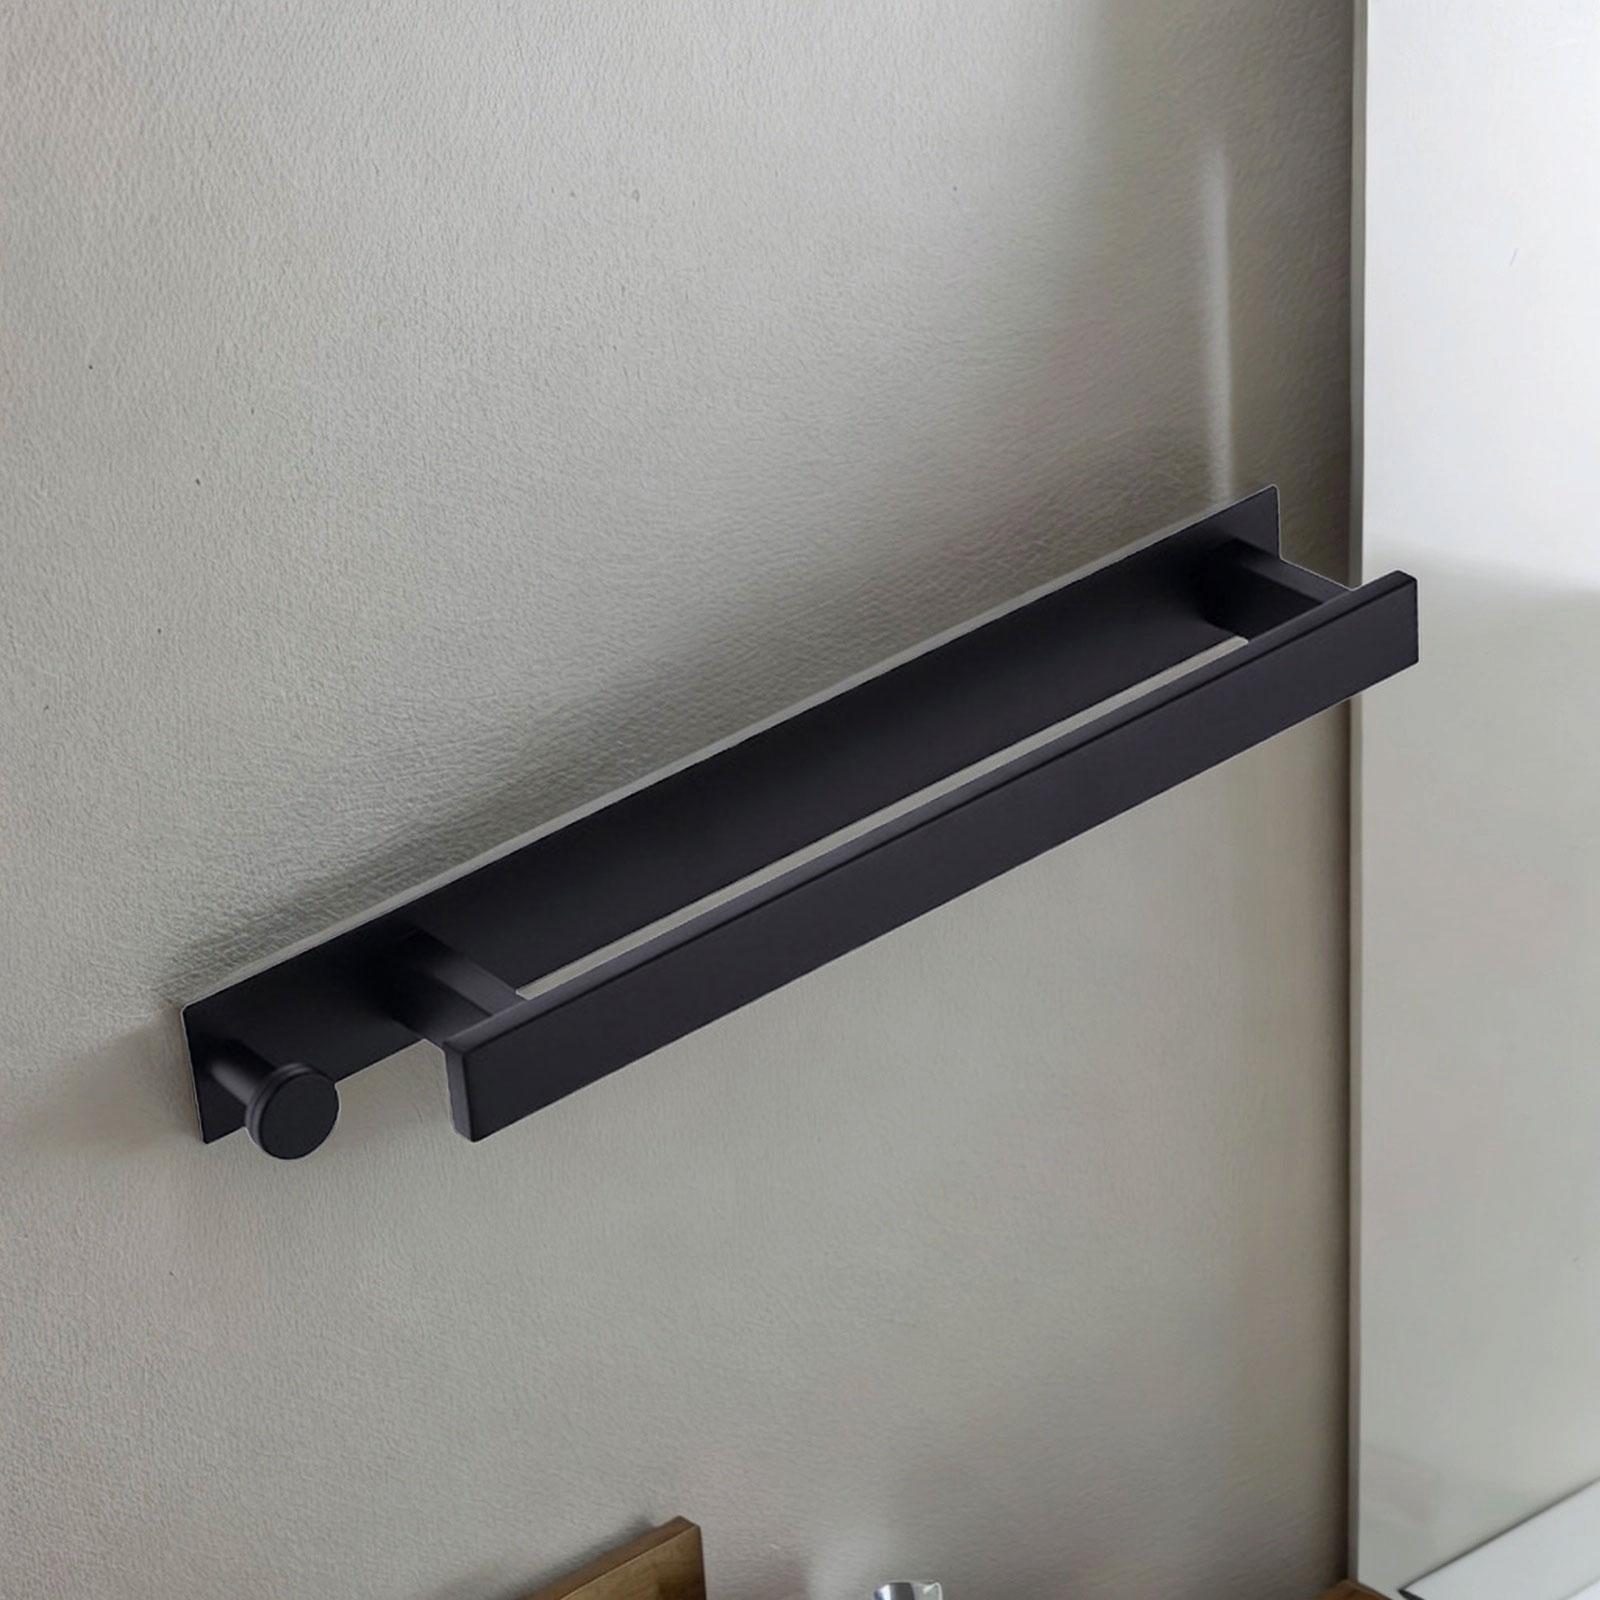 Towel Rack Wall Mounted Towel Holder Towel Rail for Bathroom Cabinet Bedroom Black